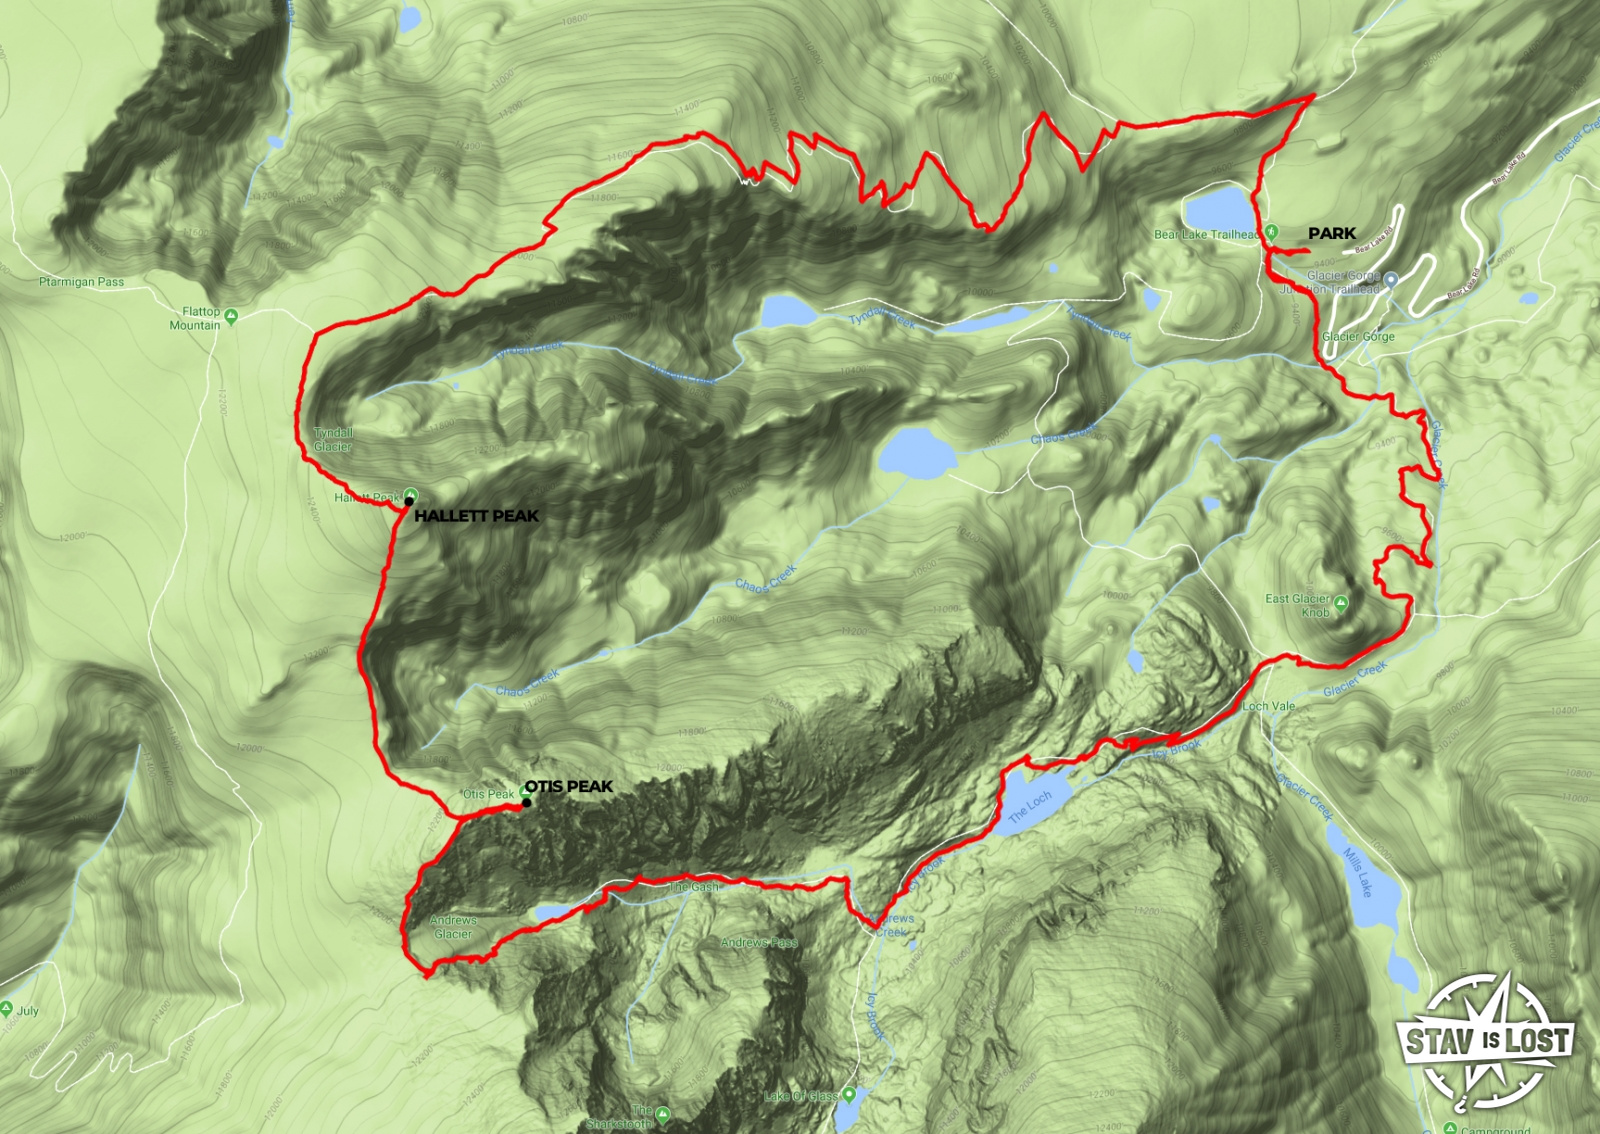 map for Hallett Peak and Otis Peak via Flattop Mountain and Andrews Glacier by stav is lost